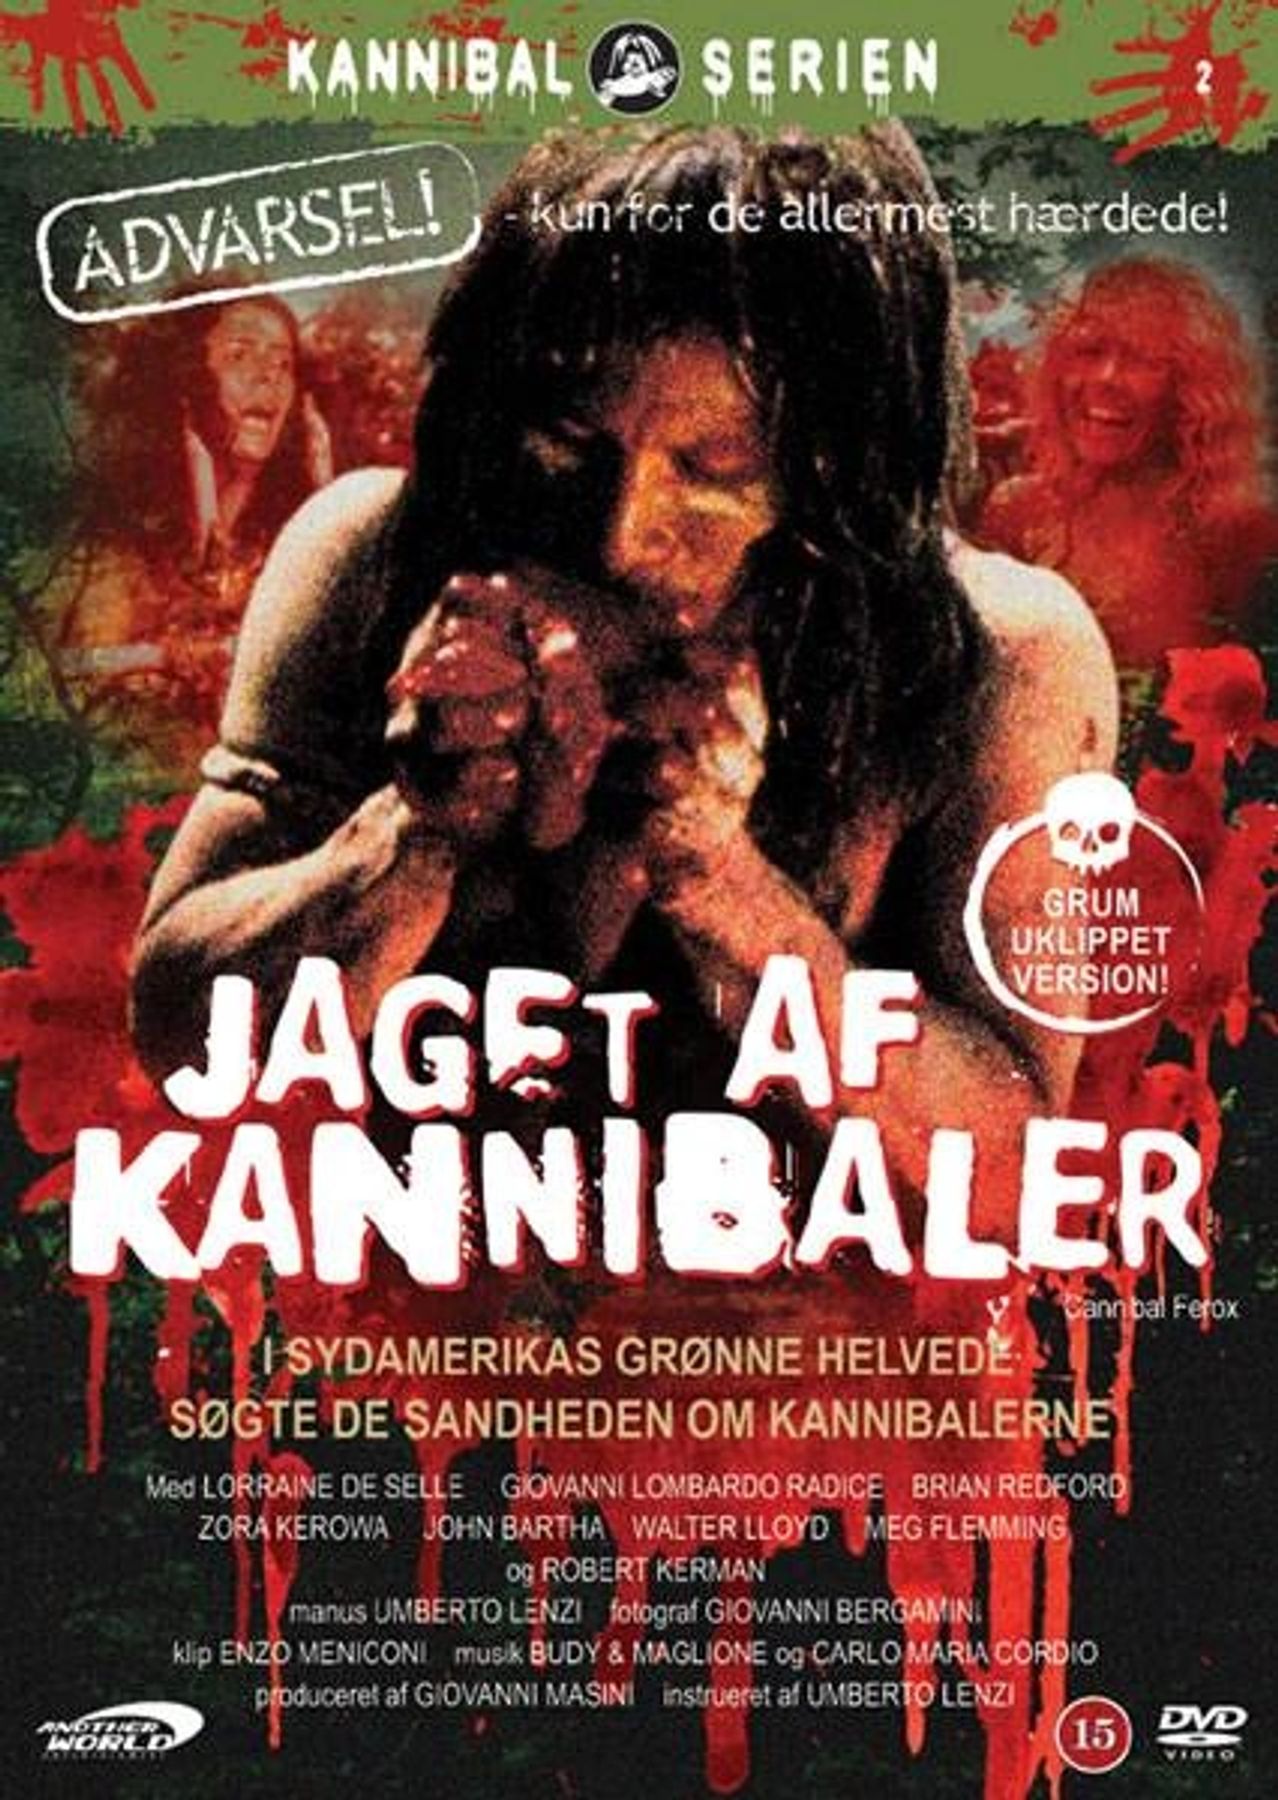 Jaget AF Kannibaler aka Cannibal Ferox Denmark Release DVD